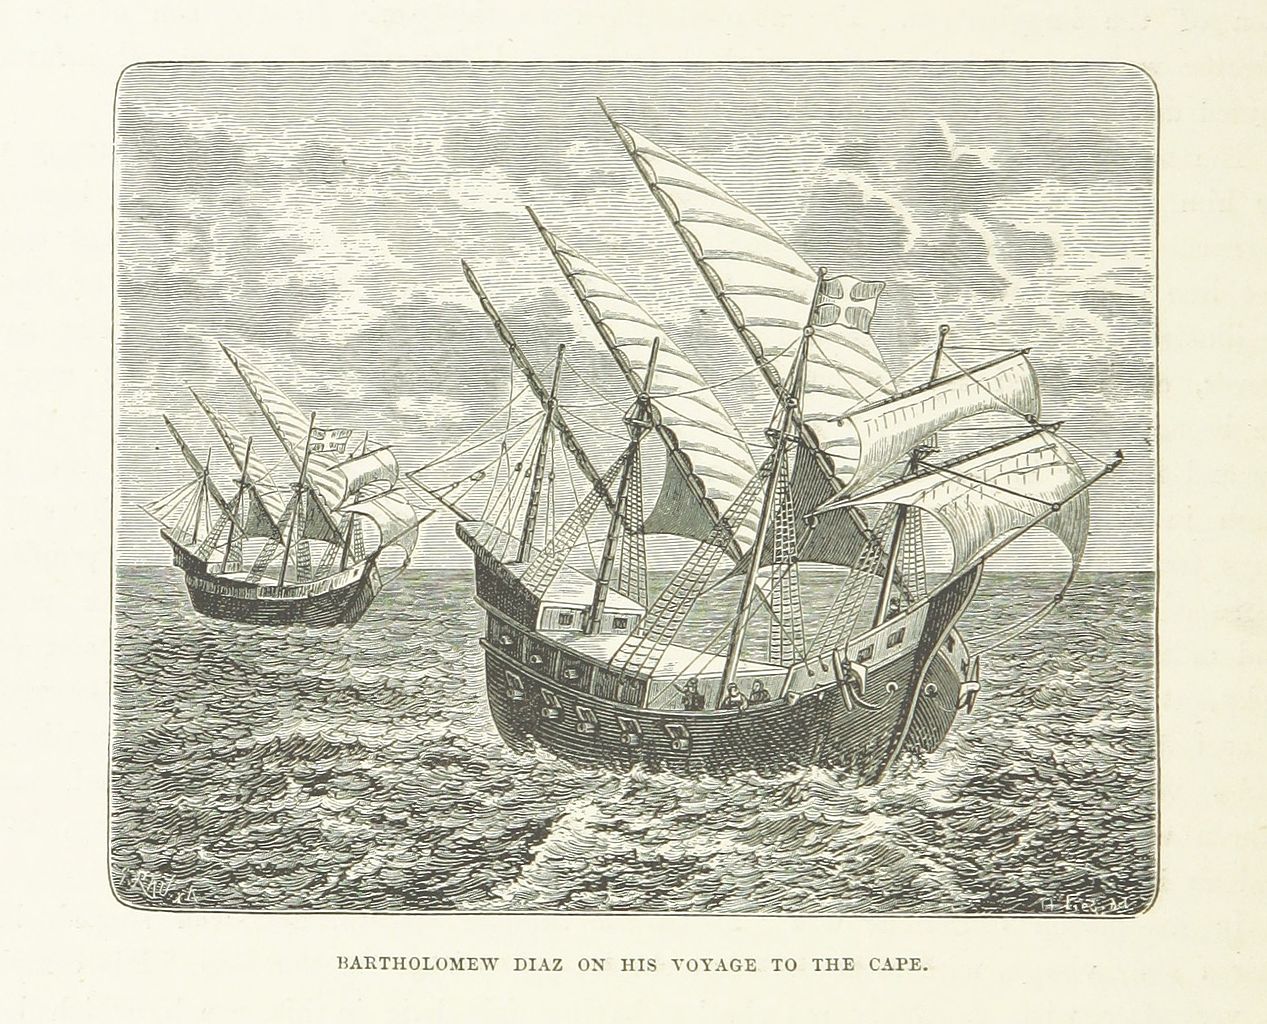 1488: Portuguese Explorer Bartolomeu Dias Sails Around the Southernmost Tip of Africa